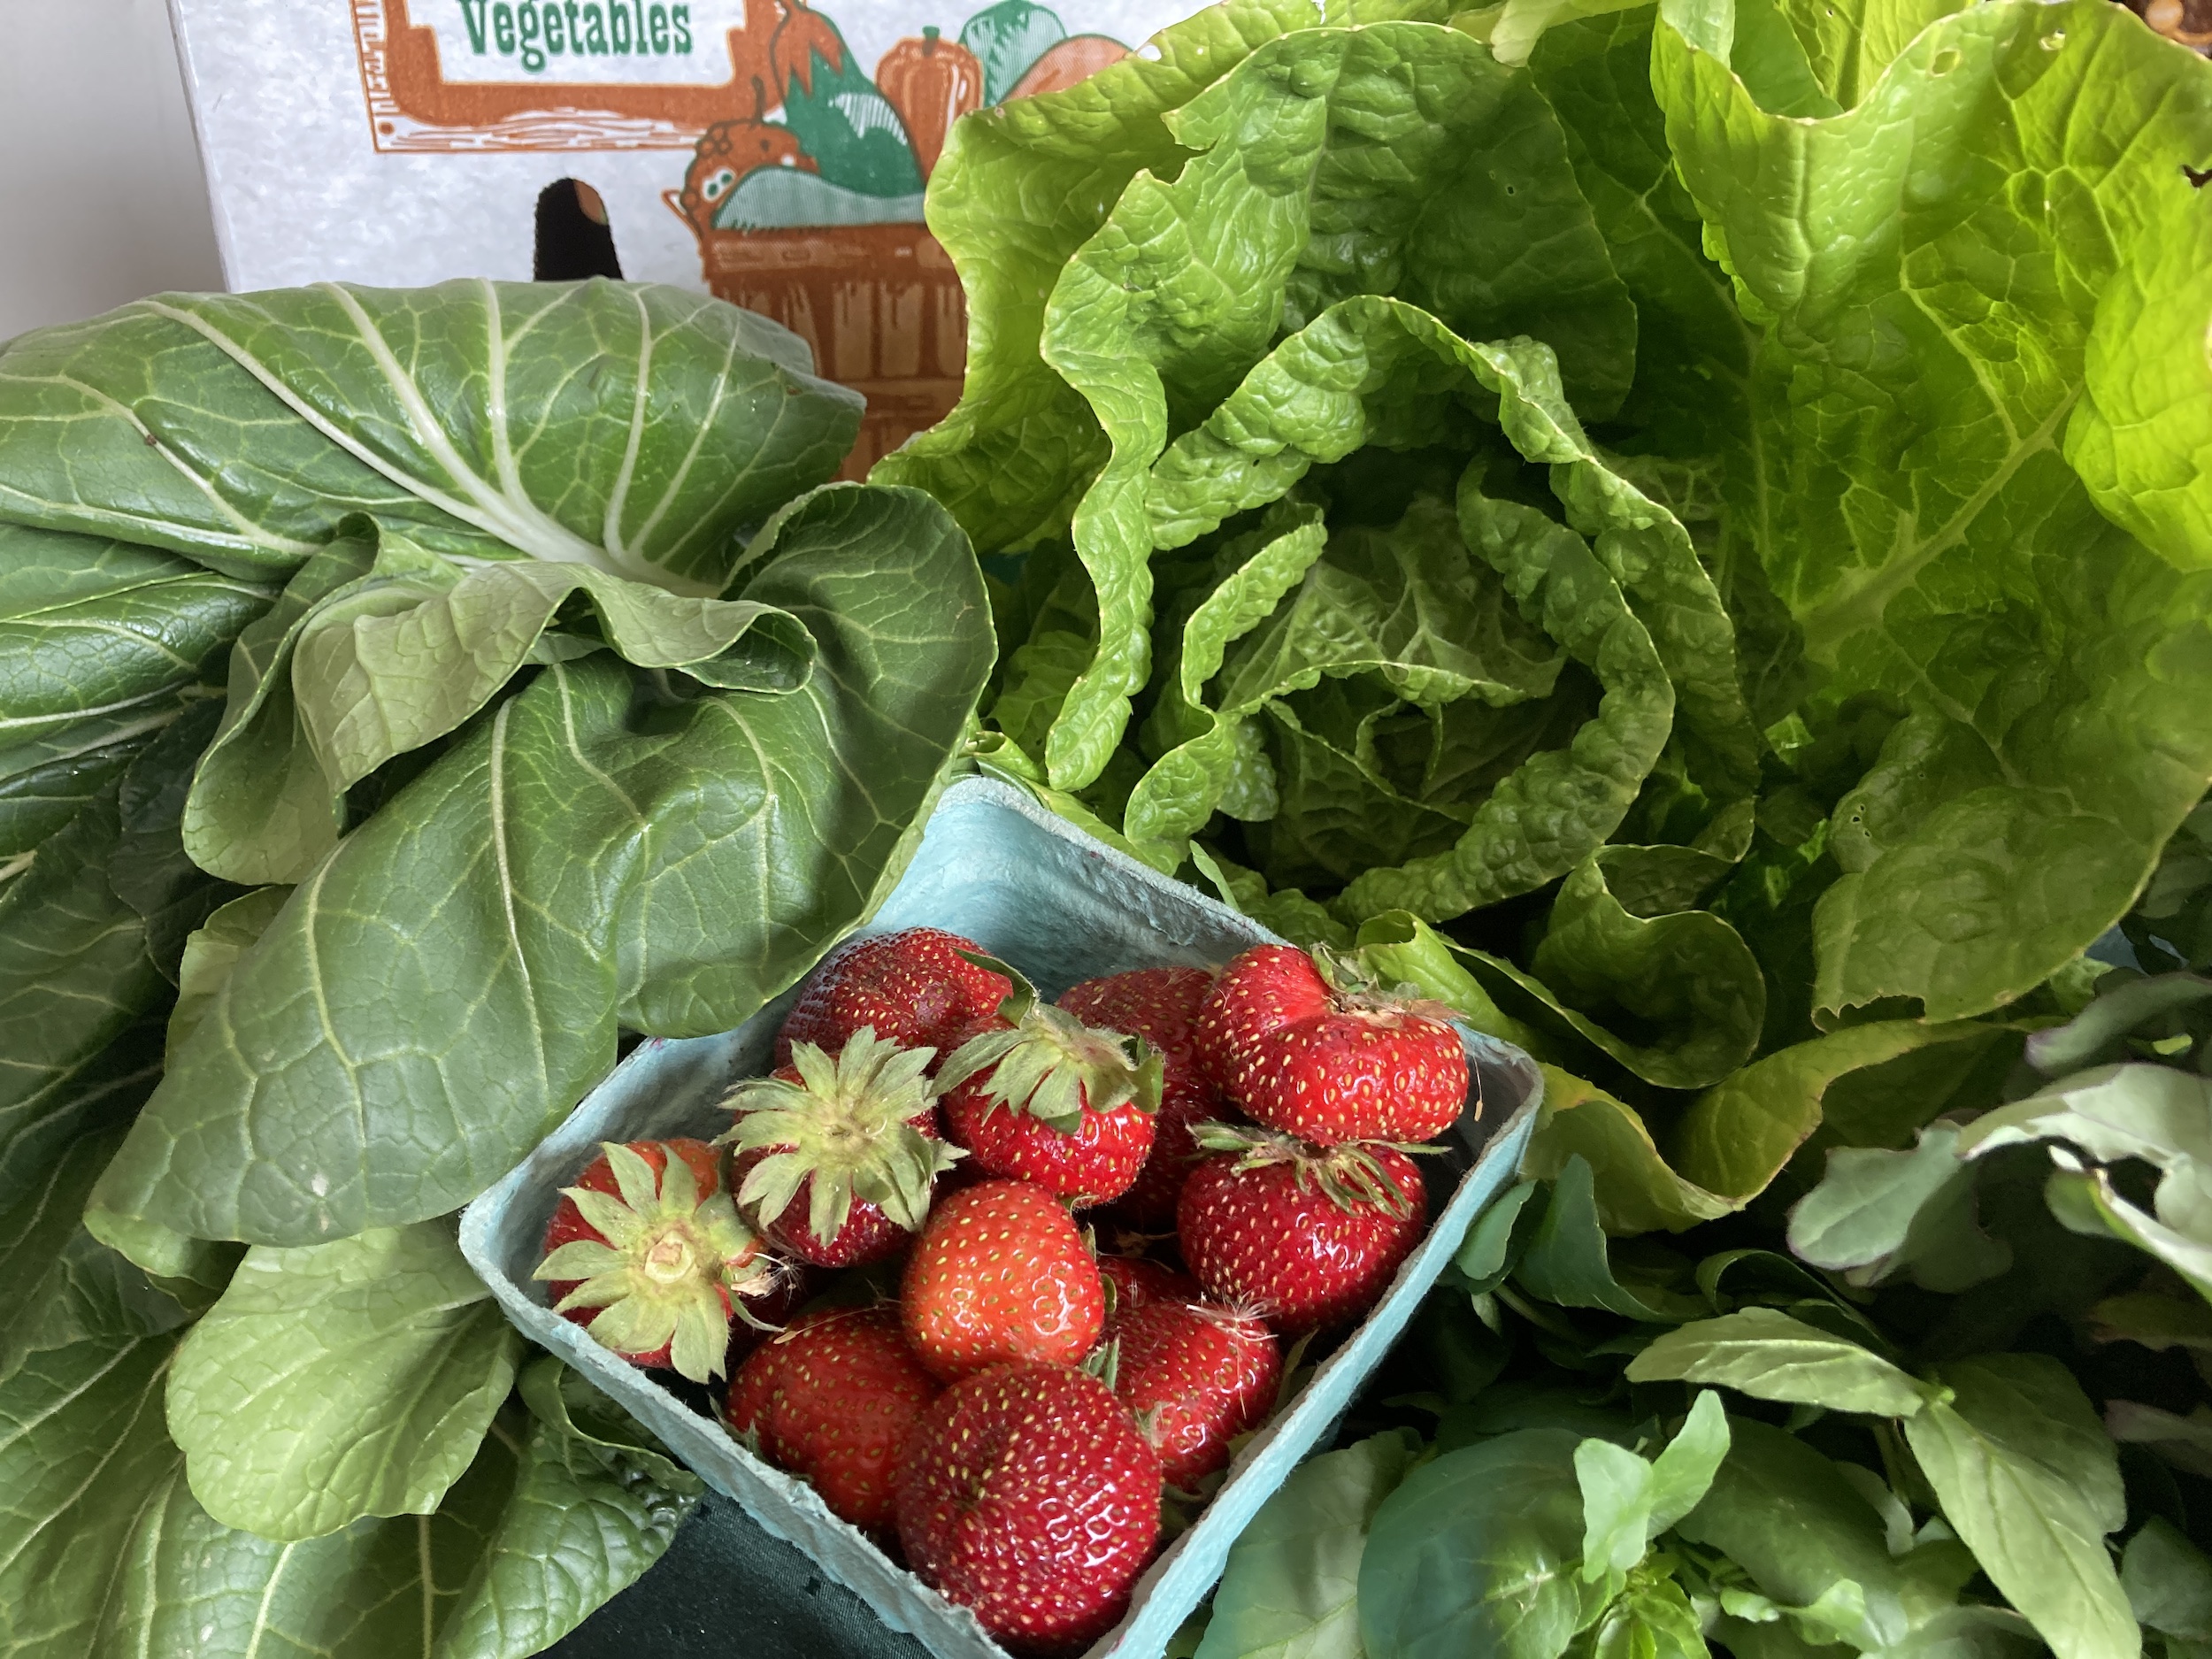 Strawberries with greens - Week 1 CSA 2023 share box